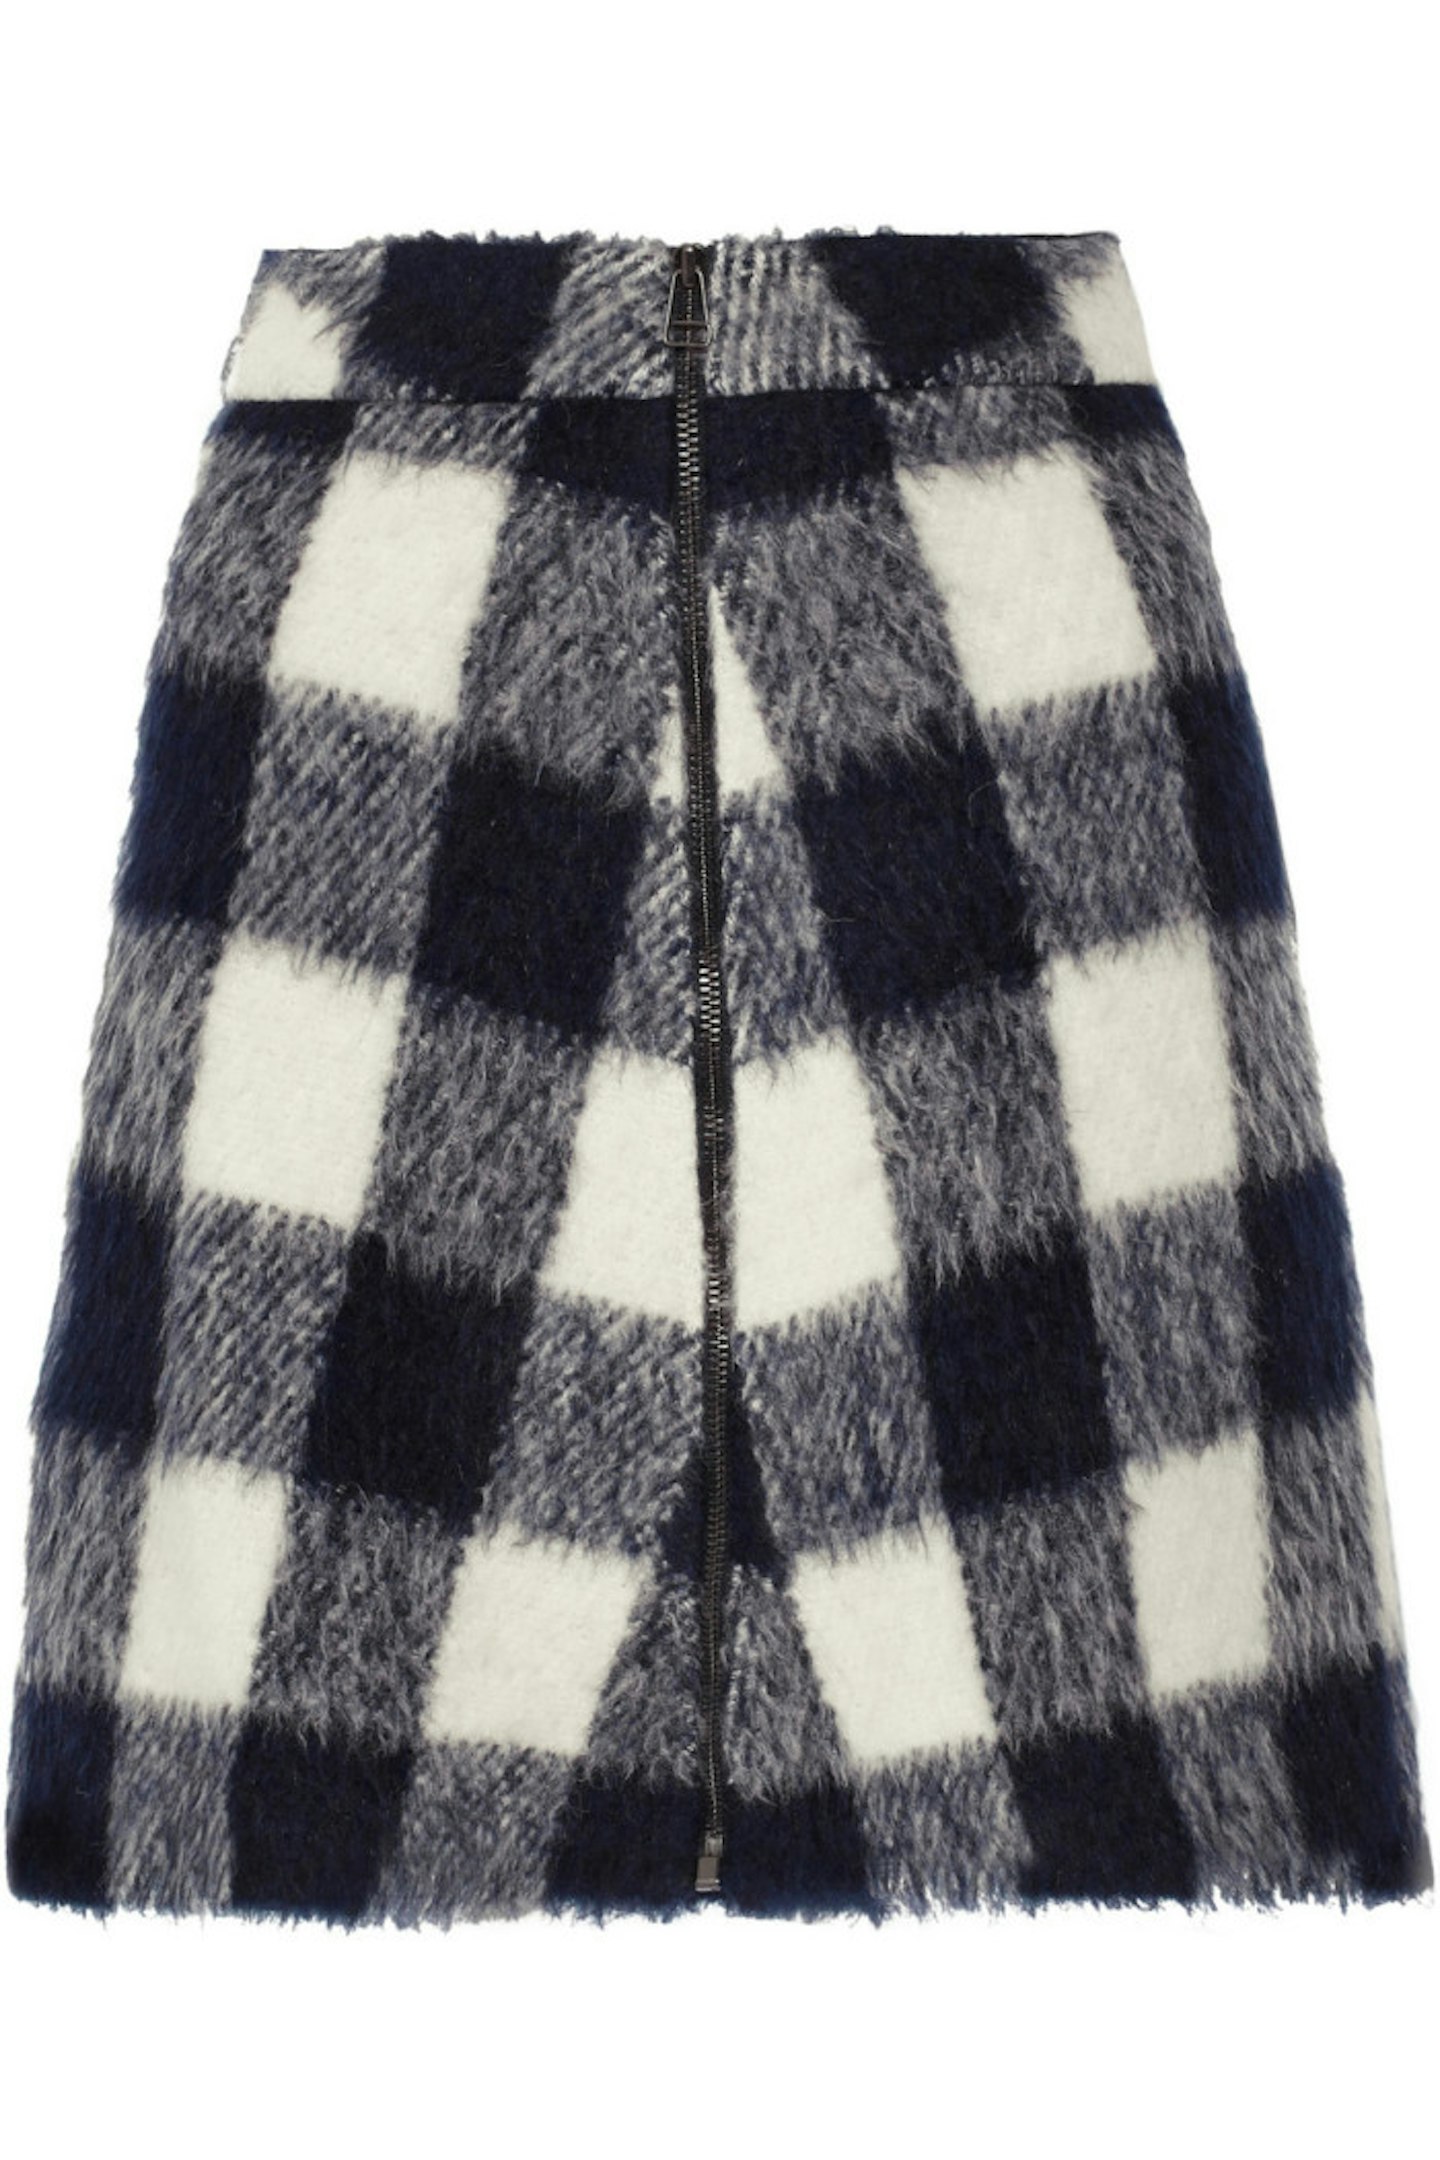 SEA Gingham knitted mini skirt, £300.00